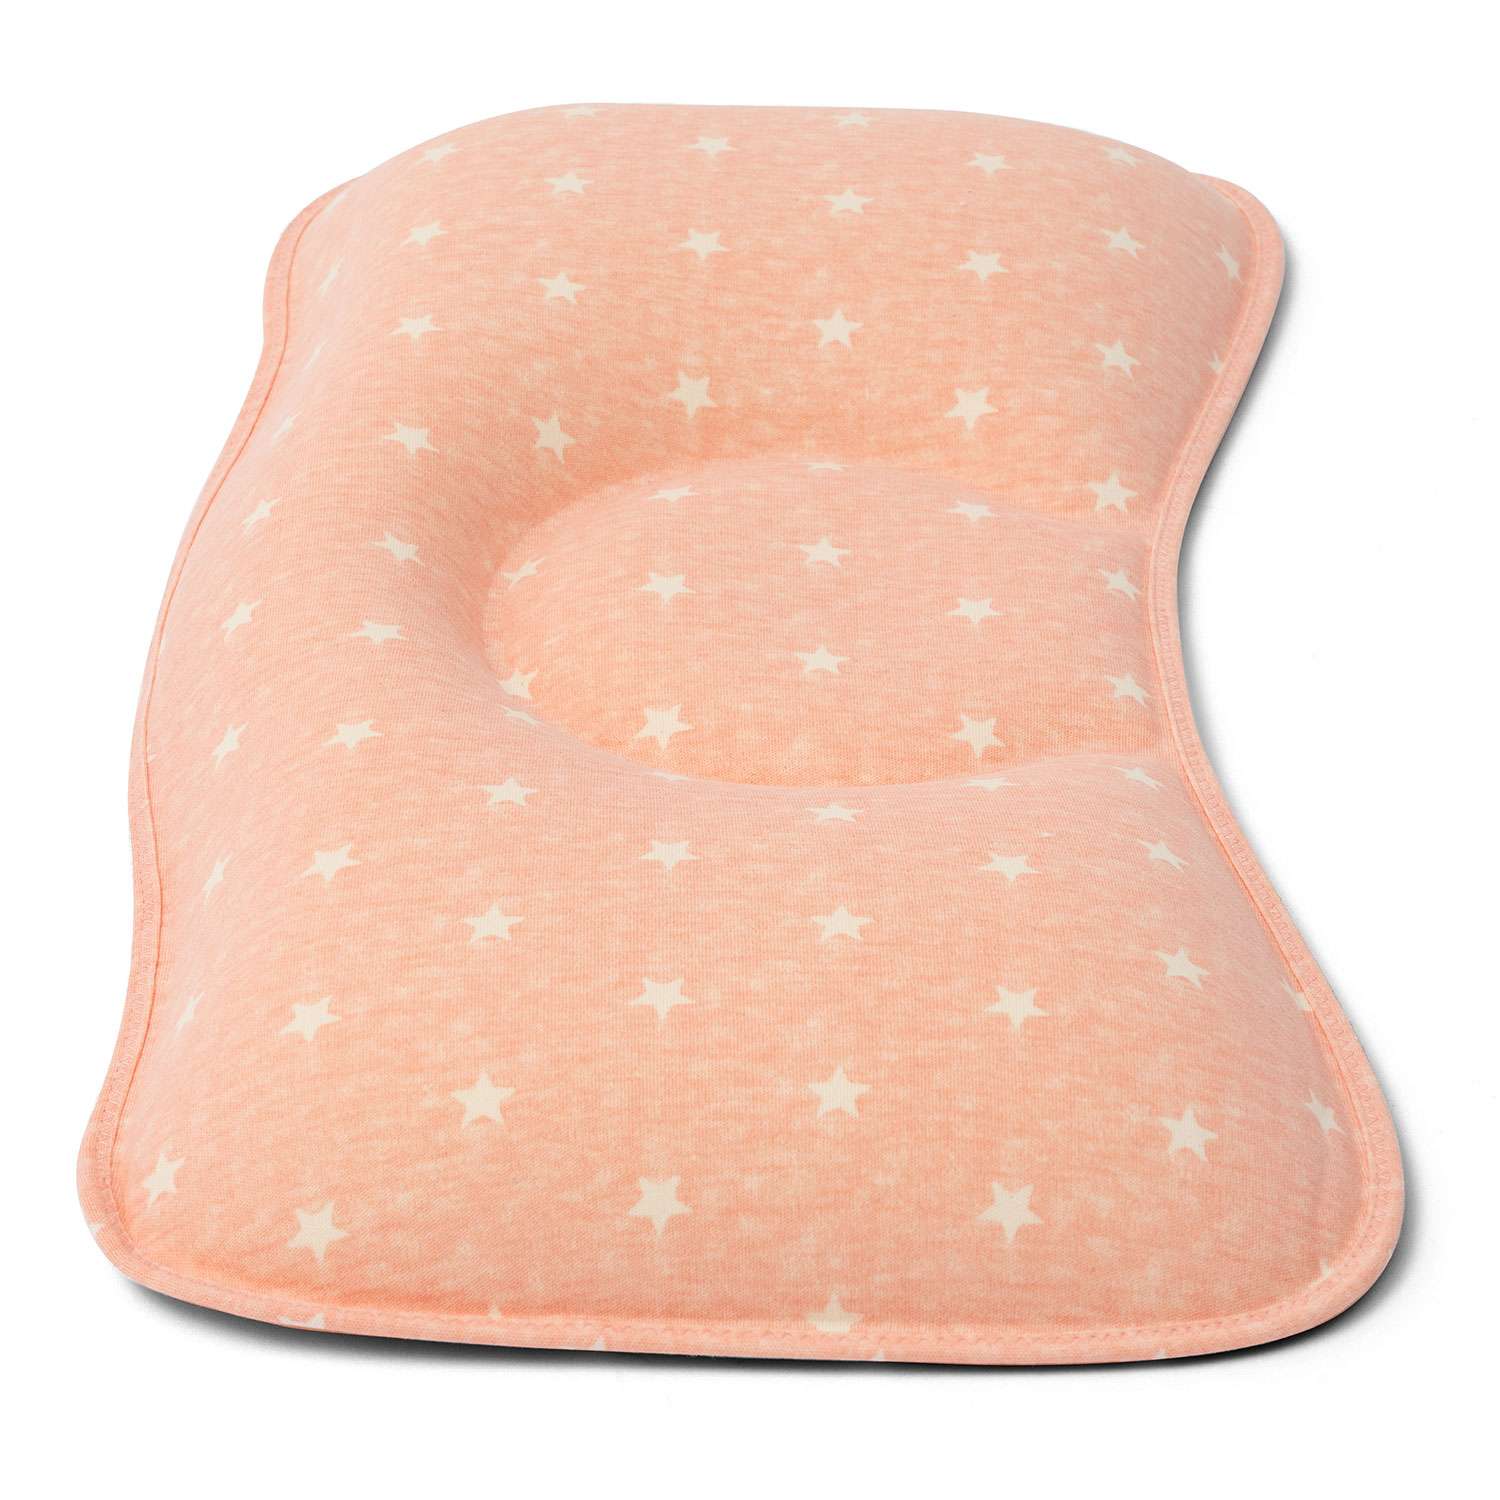 Подушка для новорожденного Nuovita Neonutti Isolotto Dipinto Звезды розовая - фото 2